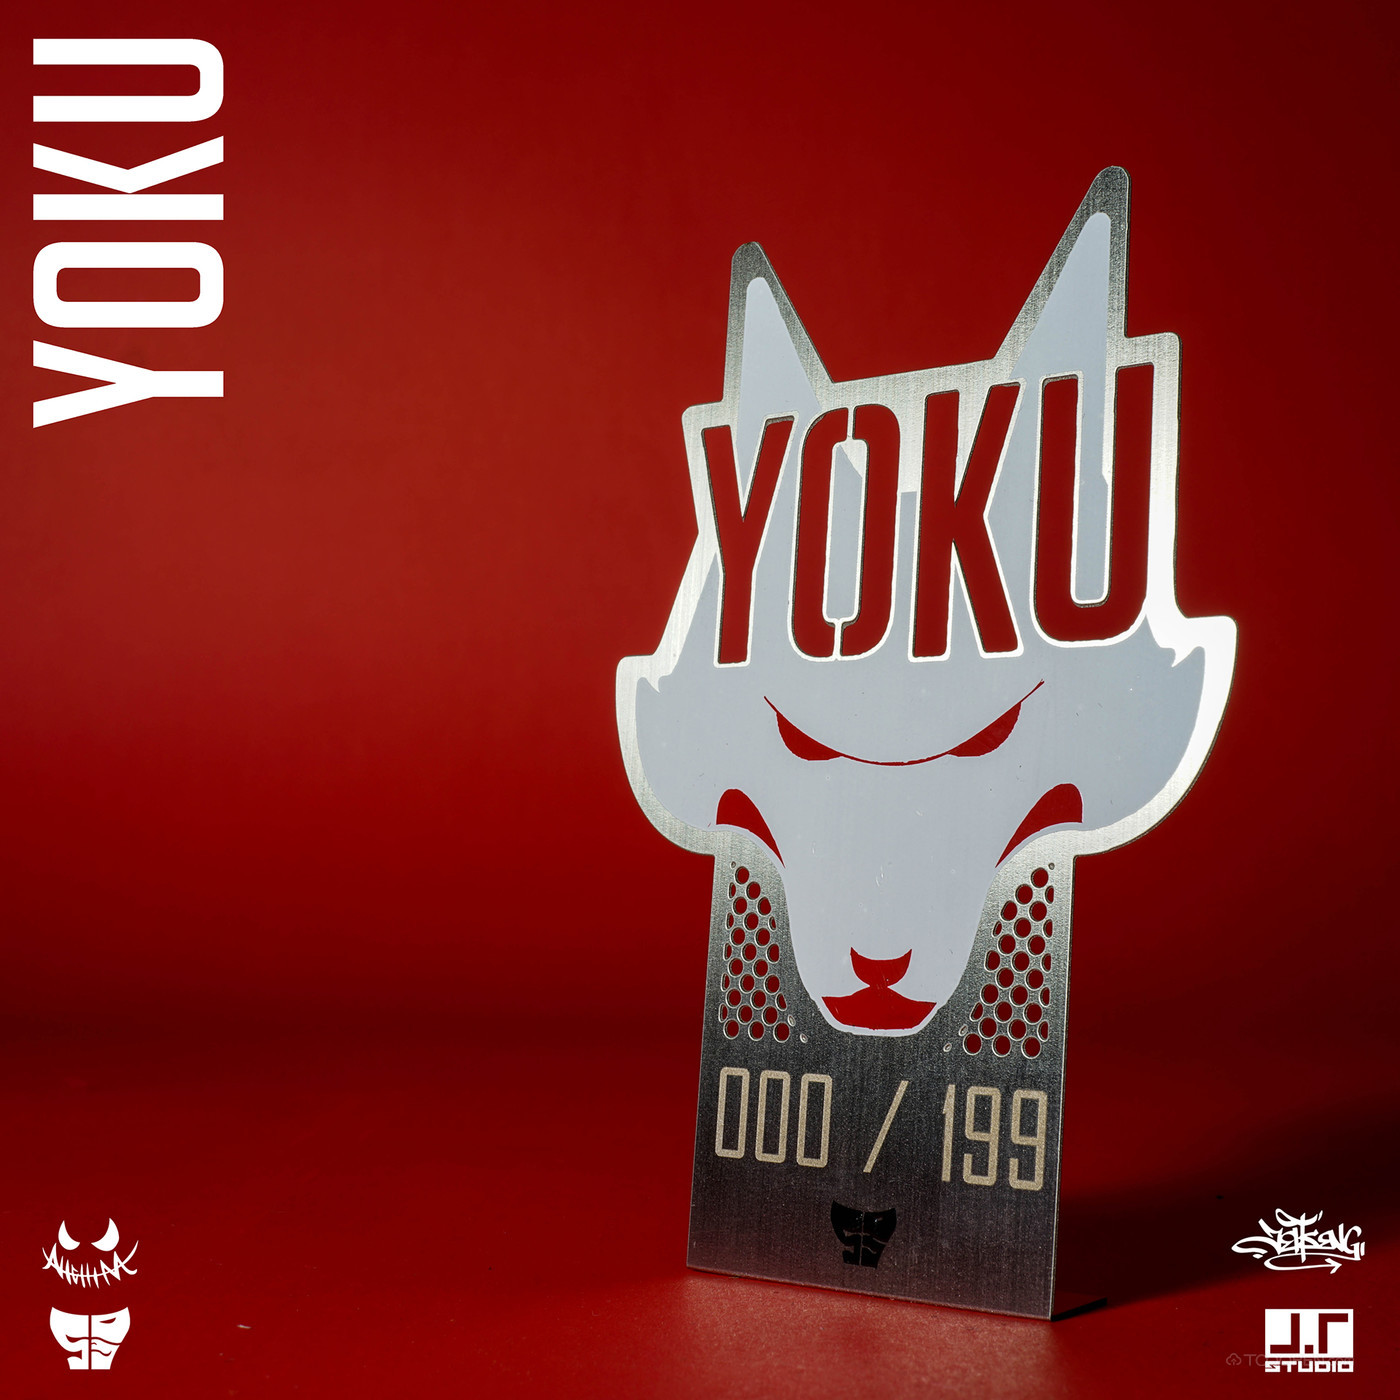  Yoku狐狸面具原创人偶玩具设计欣赏-03